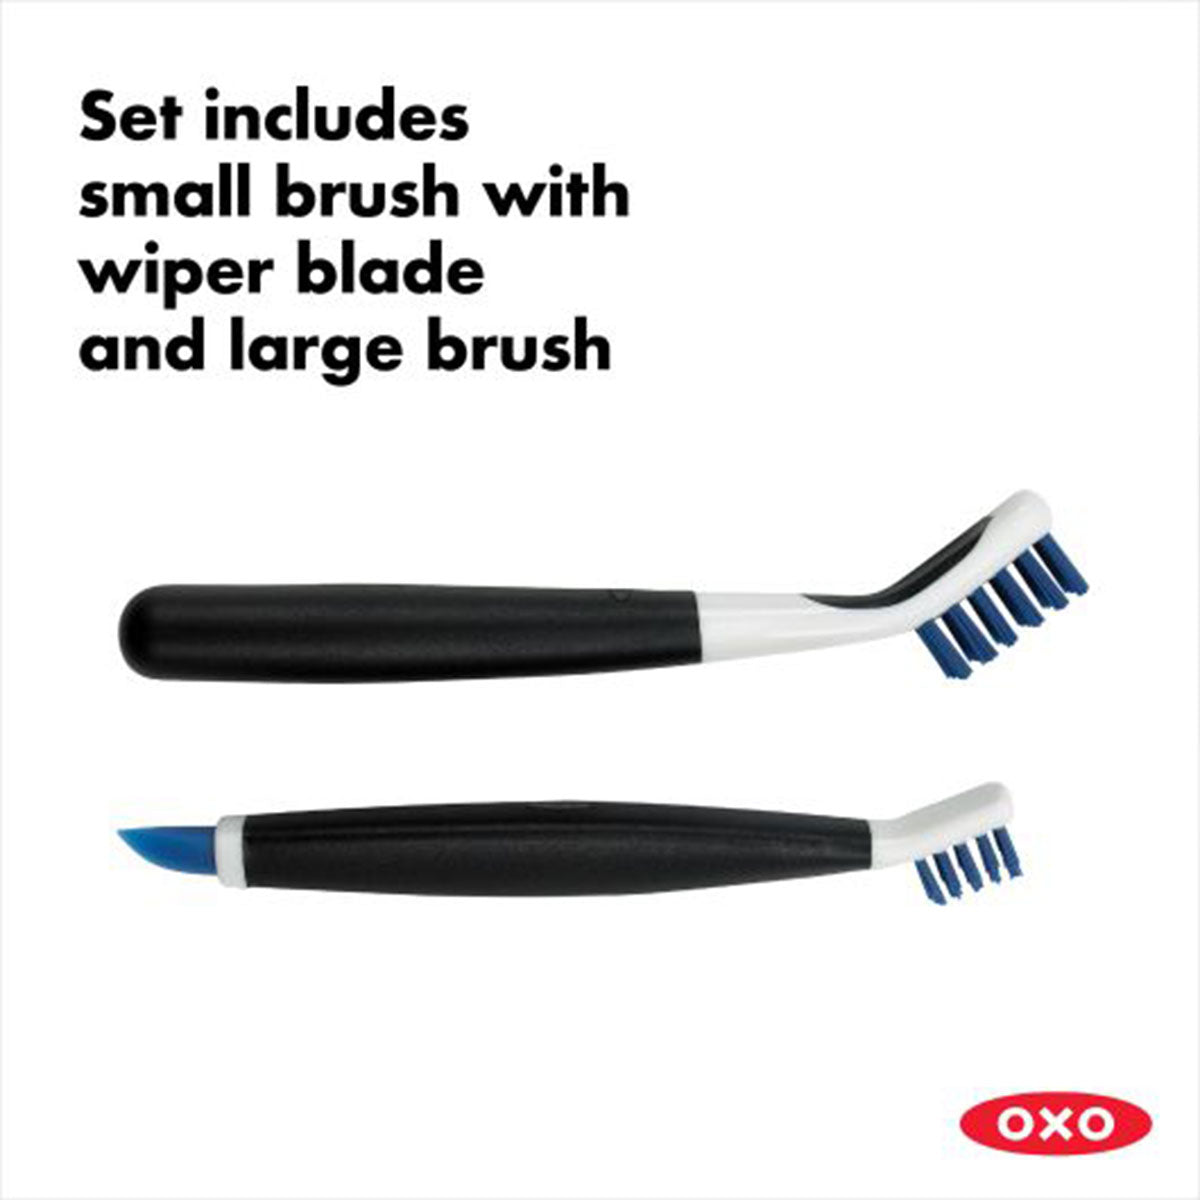 Juego de cepillos de limpieza profunda para baño OXO (2 cepillos, azul